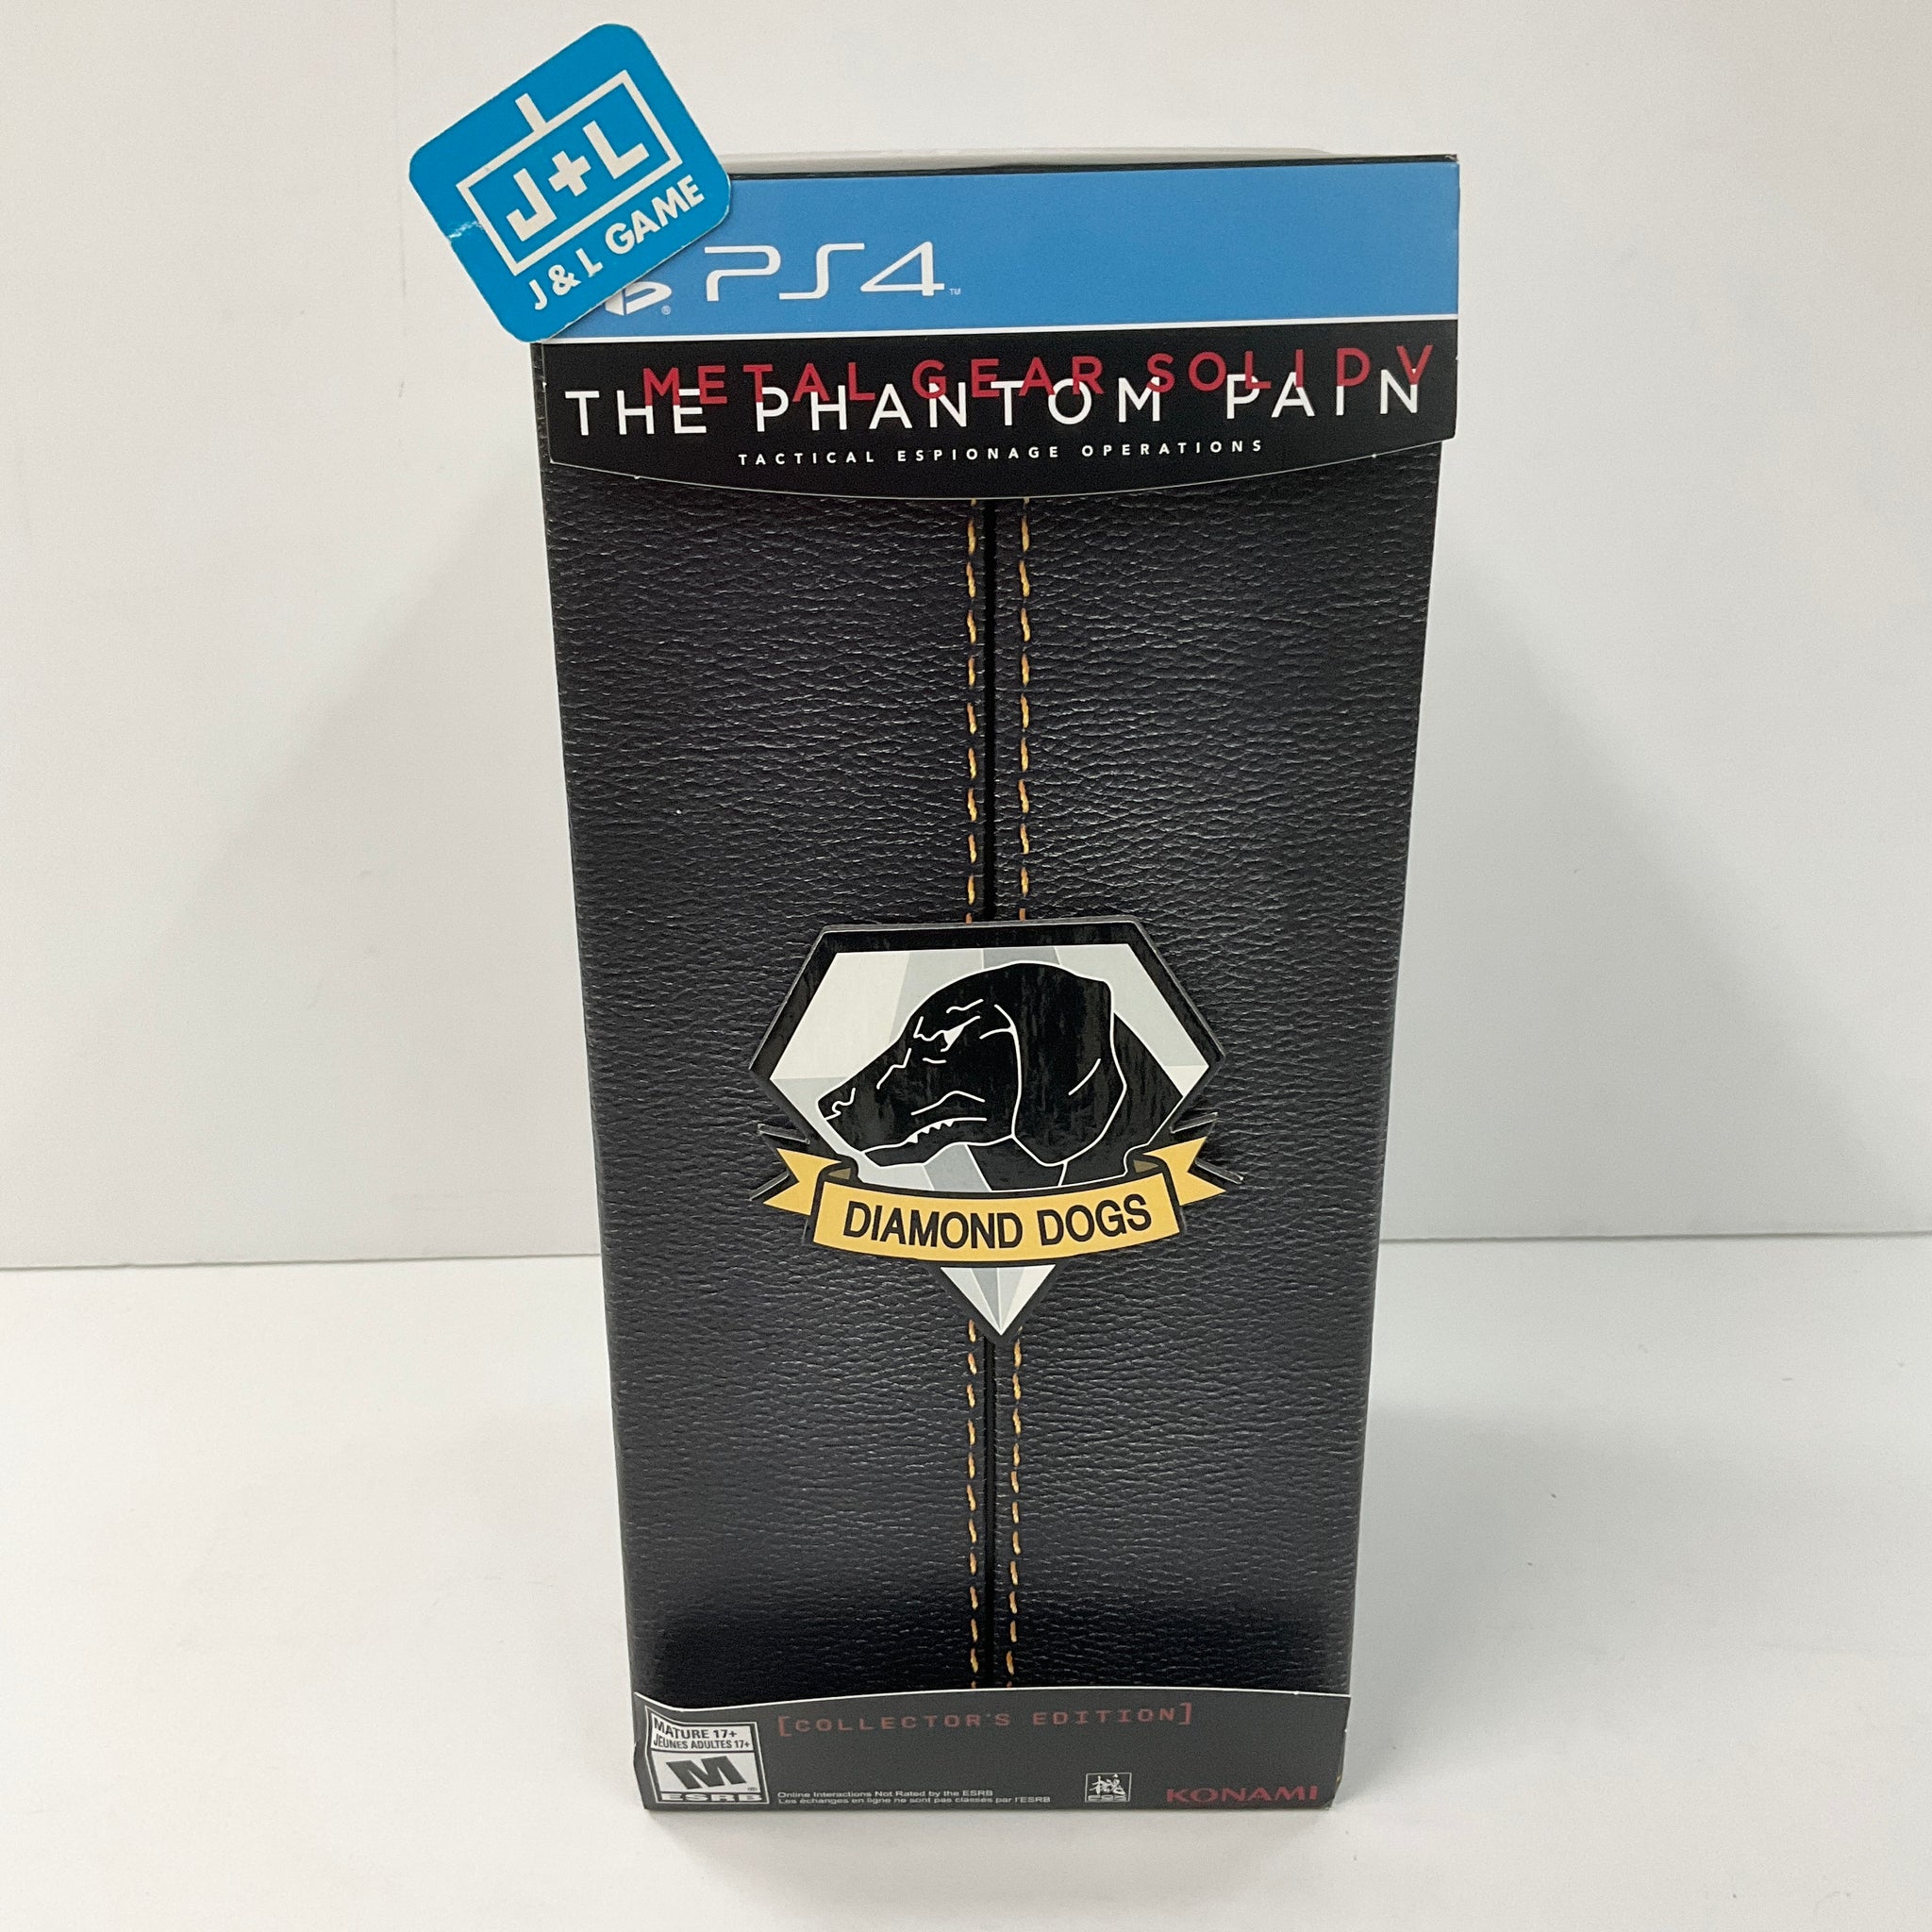 METAL GEAR SOLID V: THE PHANTOM PAIN – Official Konami Shop